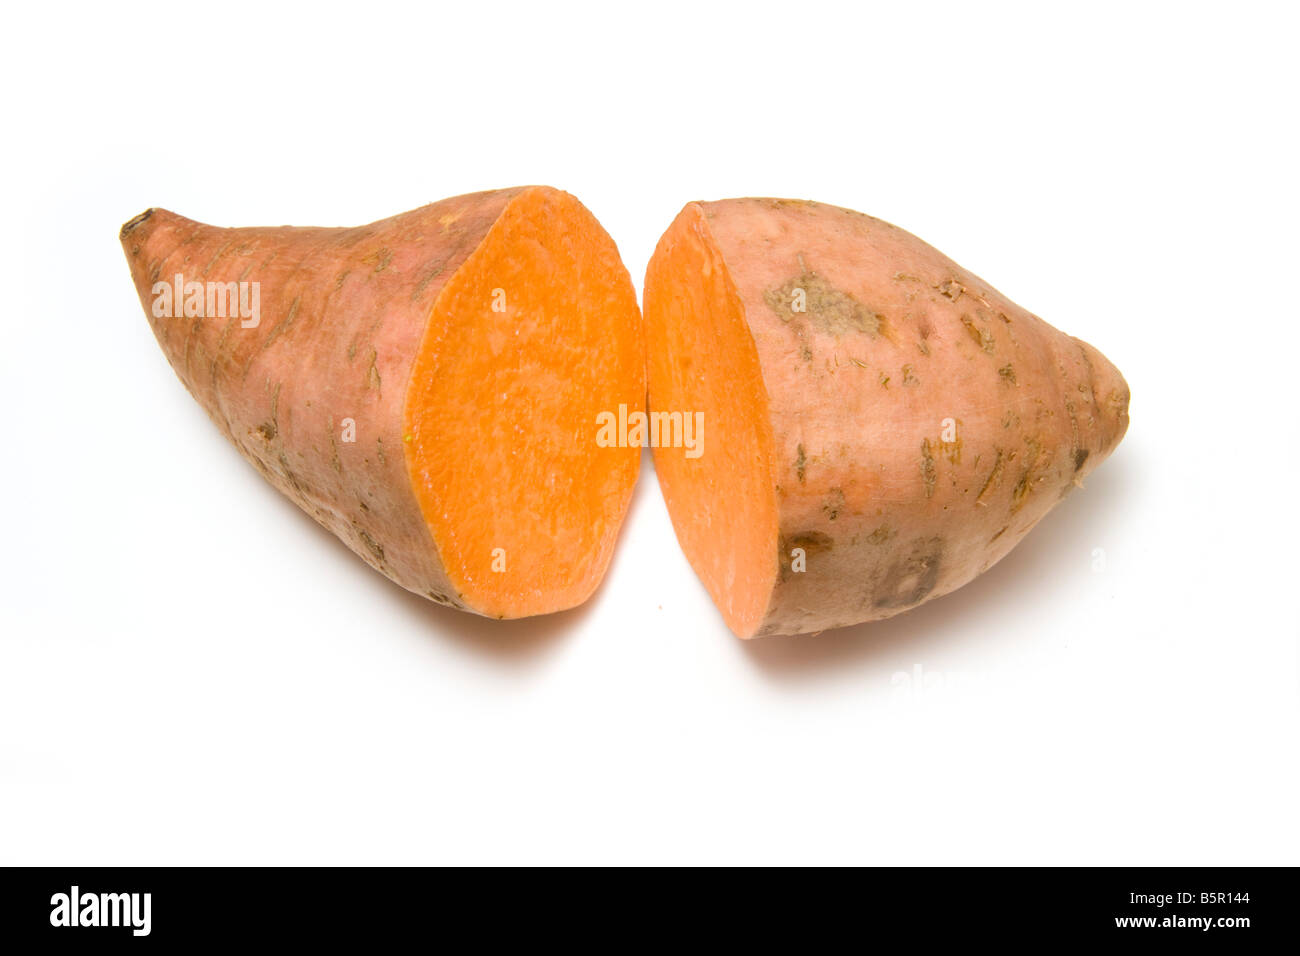 Sweet potato isolated on a white studio background Stock Photo